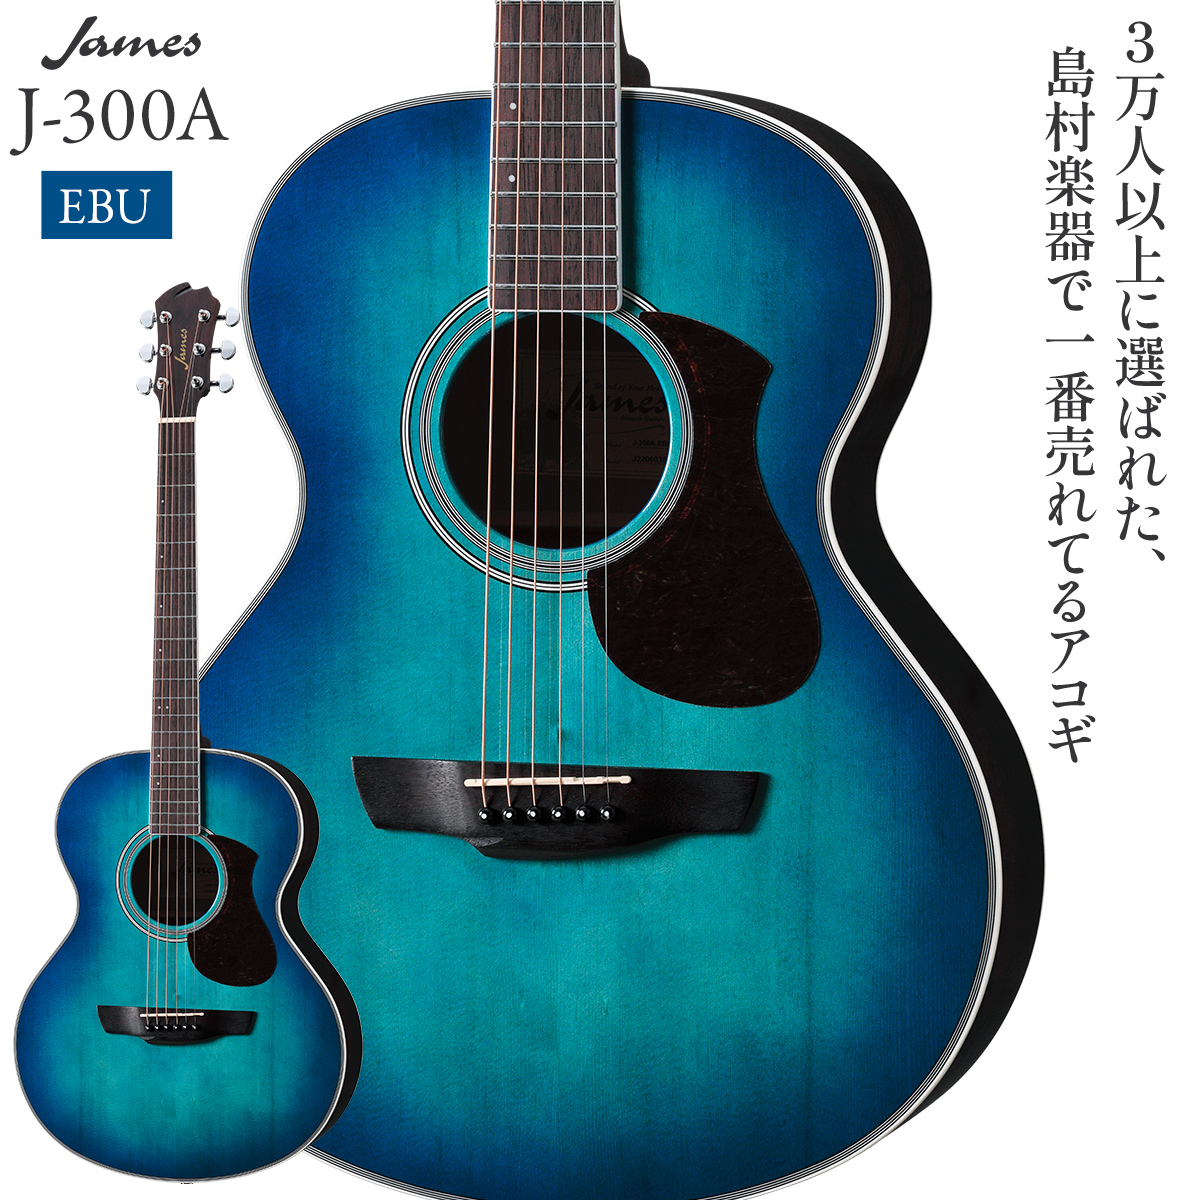 James  J-300A EBU (アースブルー) アコースティックギター ジェームス 【 イトーヨーカドー赤羽店 】